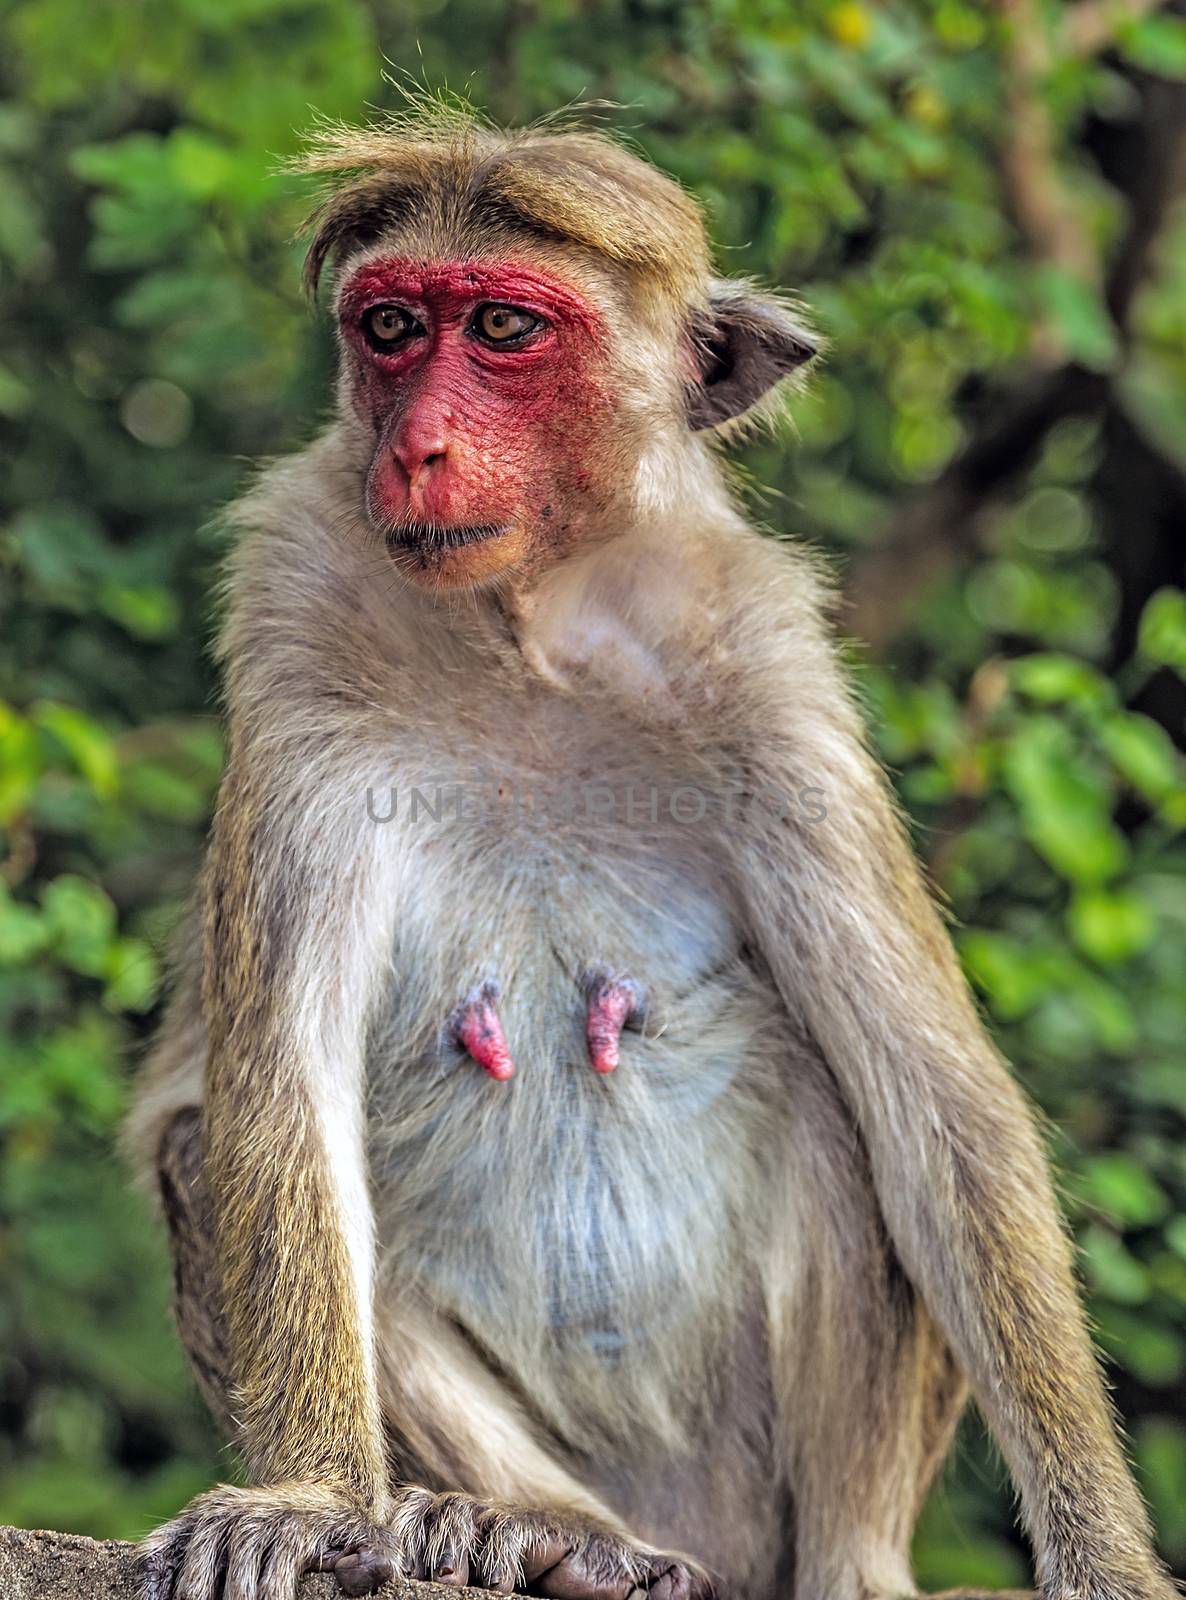 Bonnet monkey Macaca radiata primate by Vladyslav